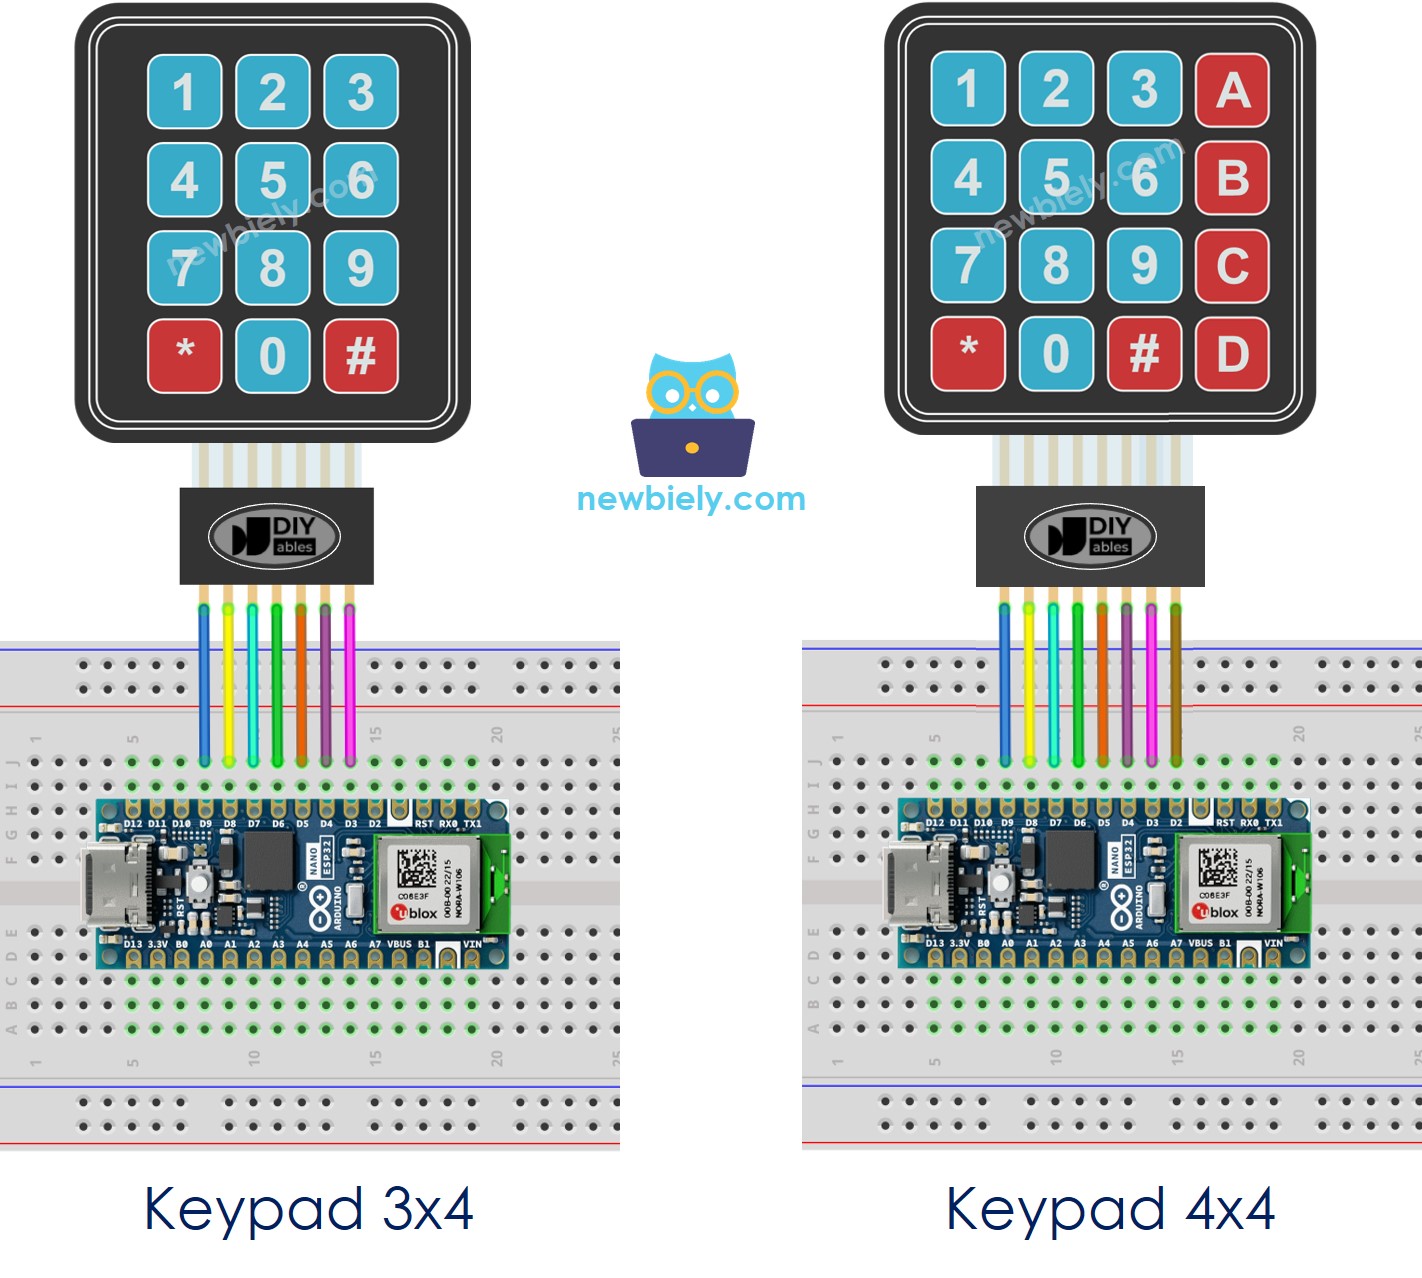 The wiring diagram between Arduino Nano ESP32 and Keypad